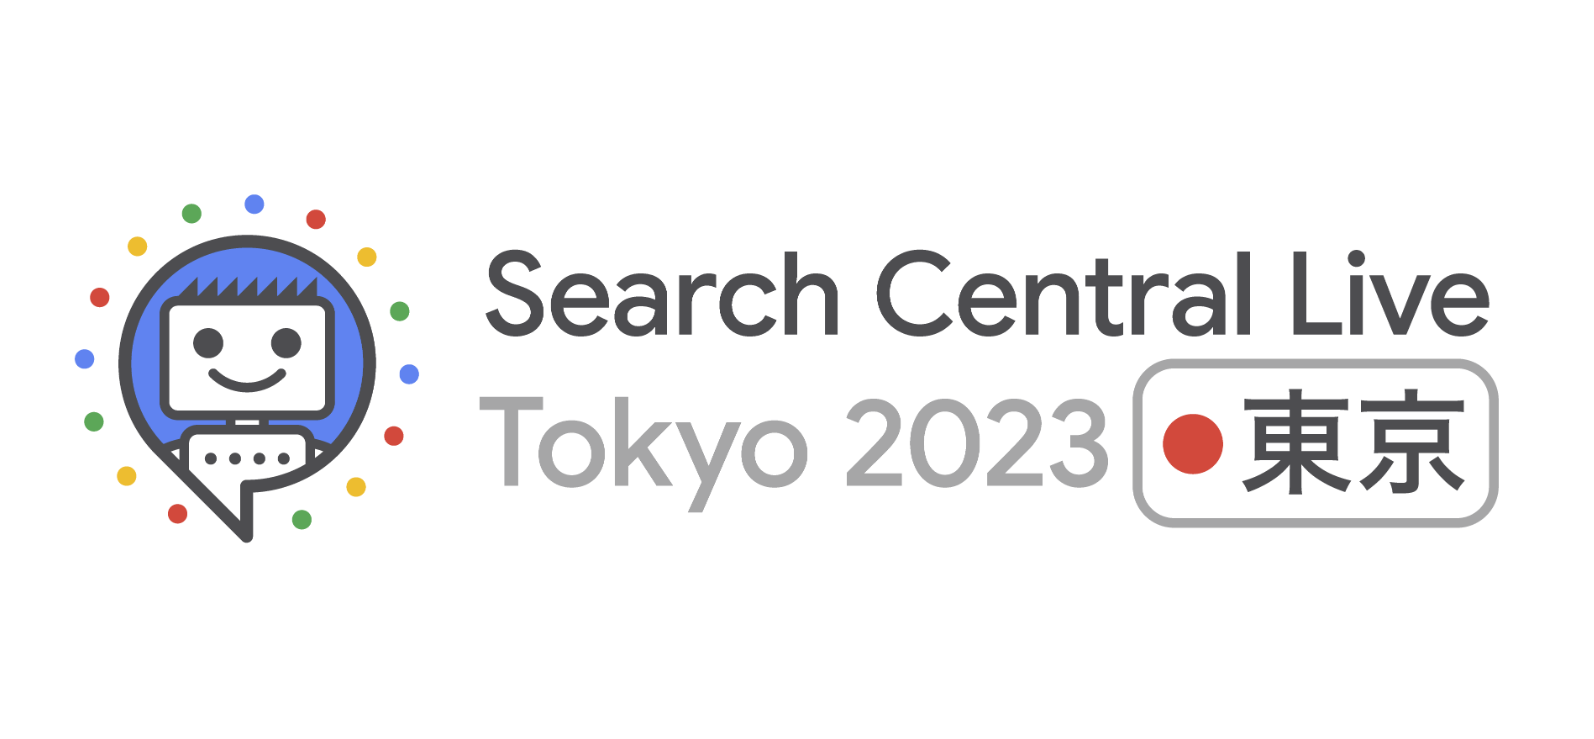 Google Search Central Live Tokyo 2023